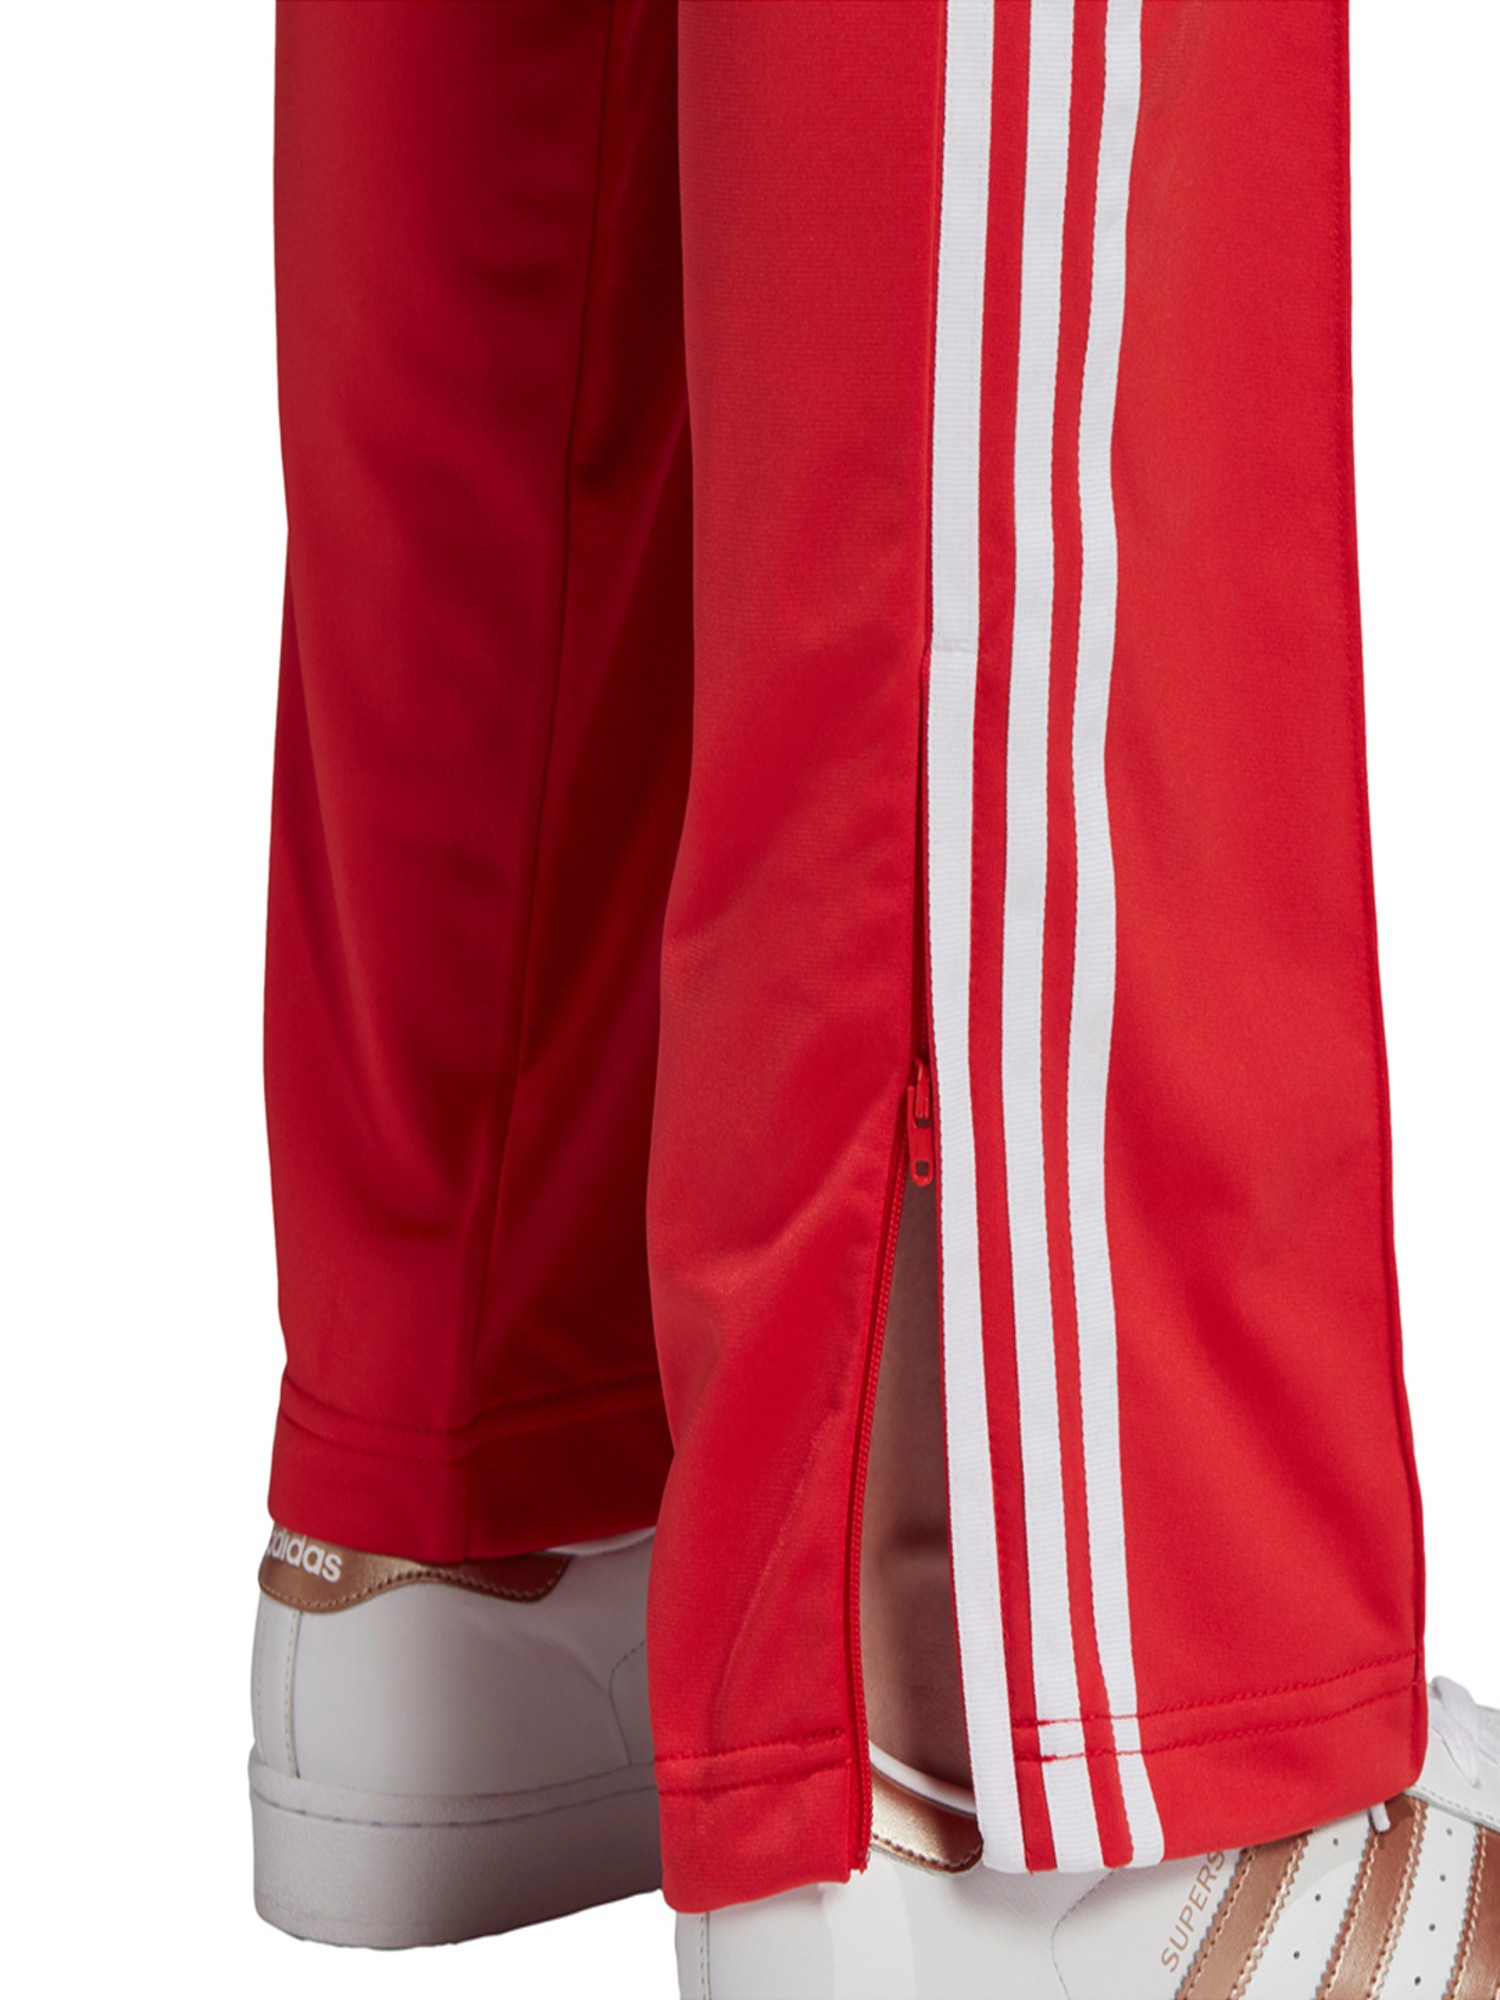 adidas Originals Superstar Fleece Track Pants BlackShadow Red XS   Amazonin Clothing  Accessories